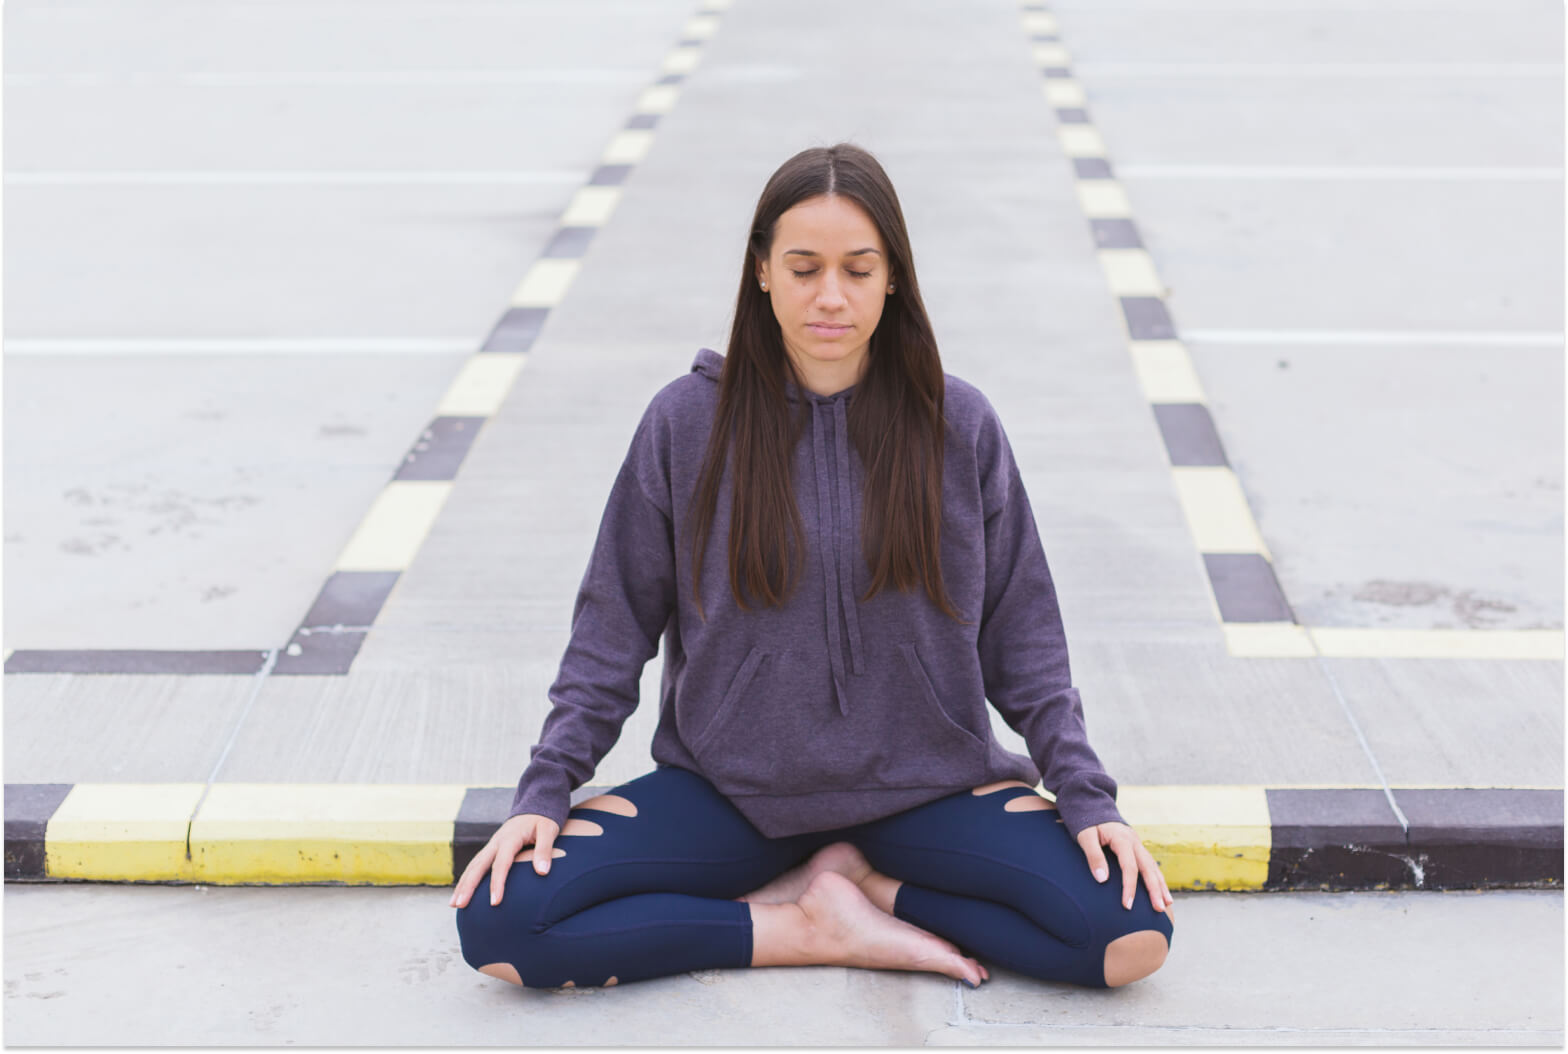 Meditation for beginners: 11 tips to start a regular practice